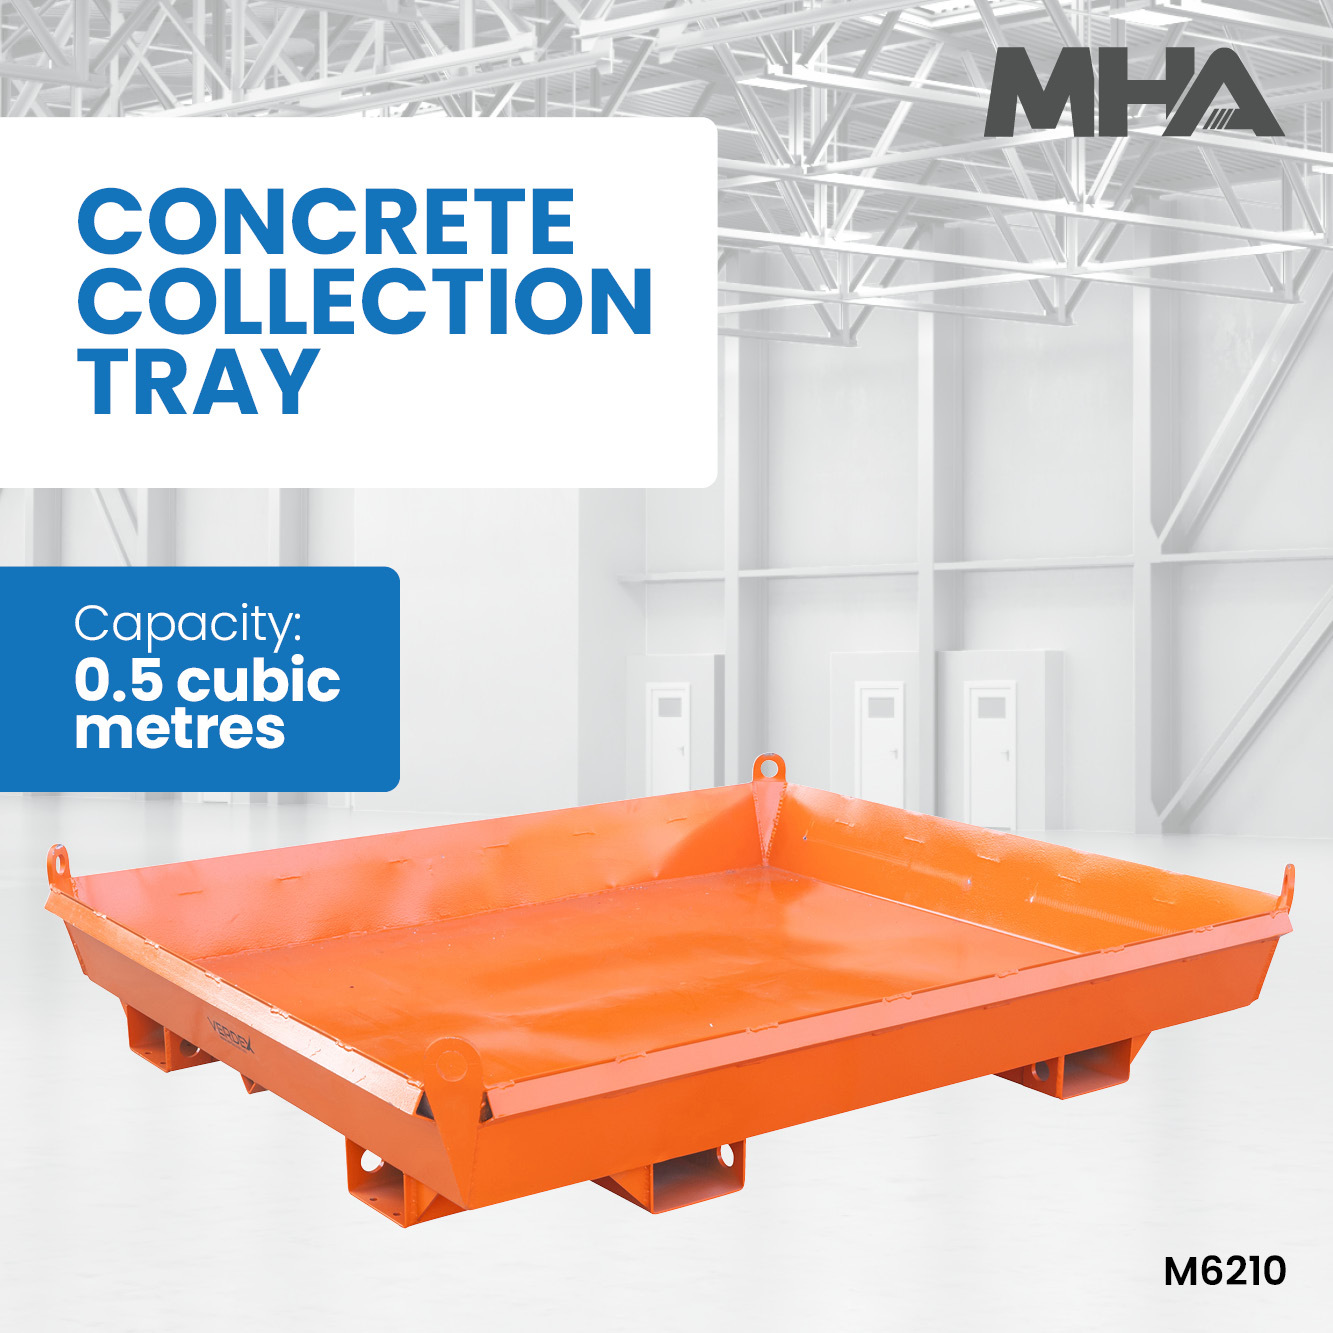 Concrete Collection Tray